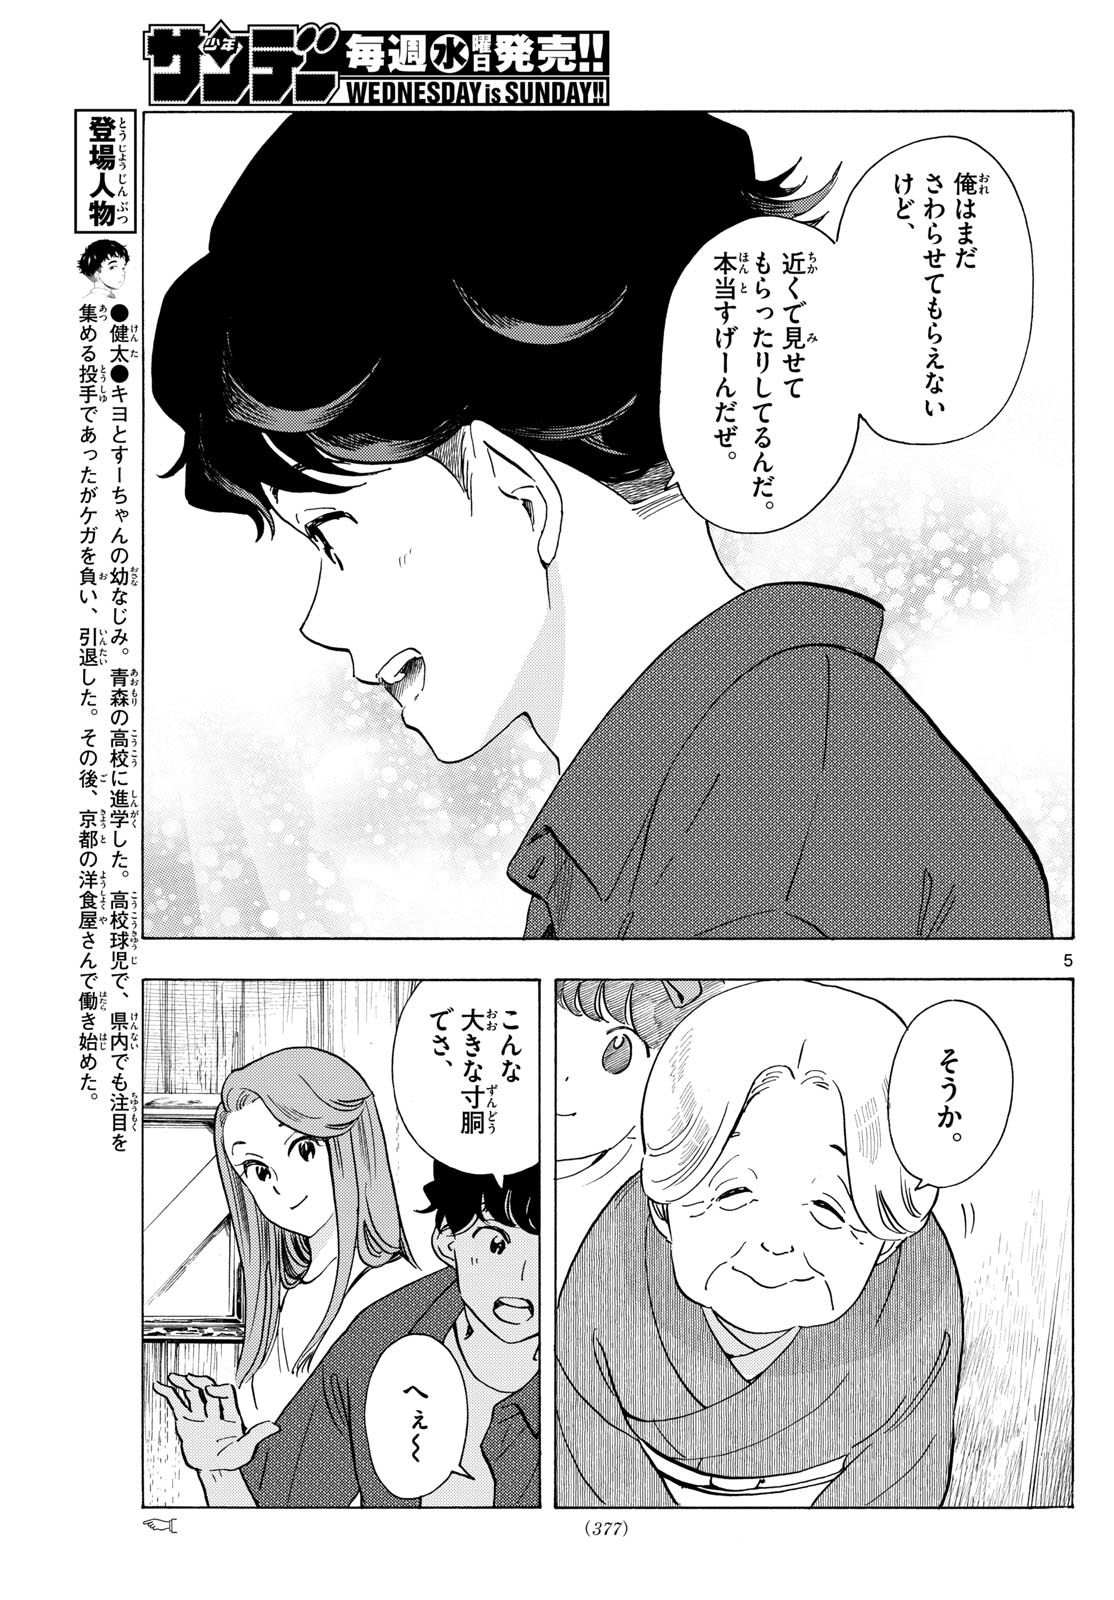 Maiko-san Chi no Makanai-san - Chapter 301 - Page 5